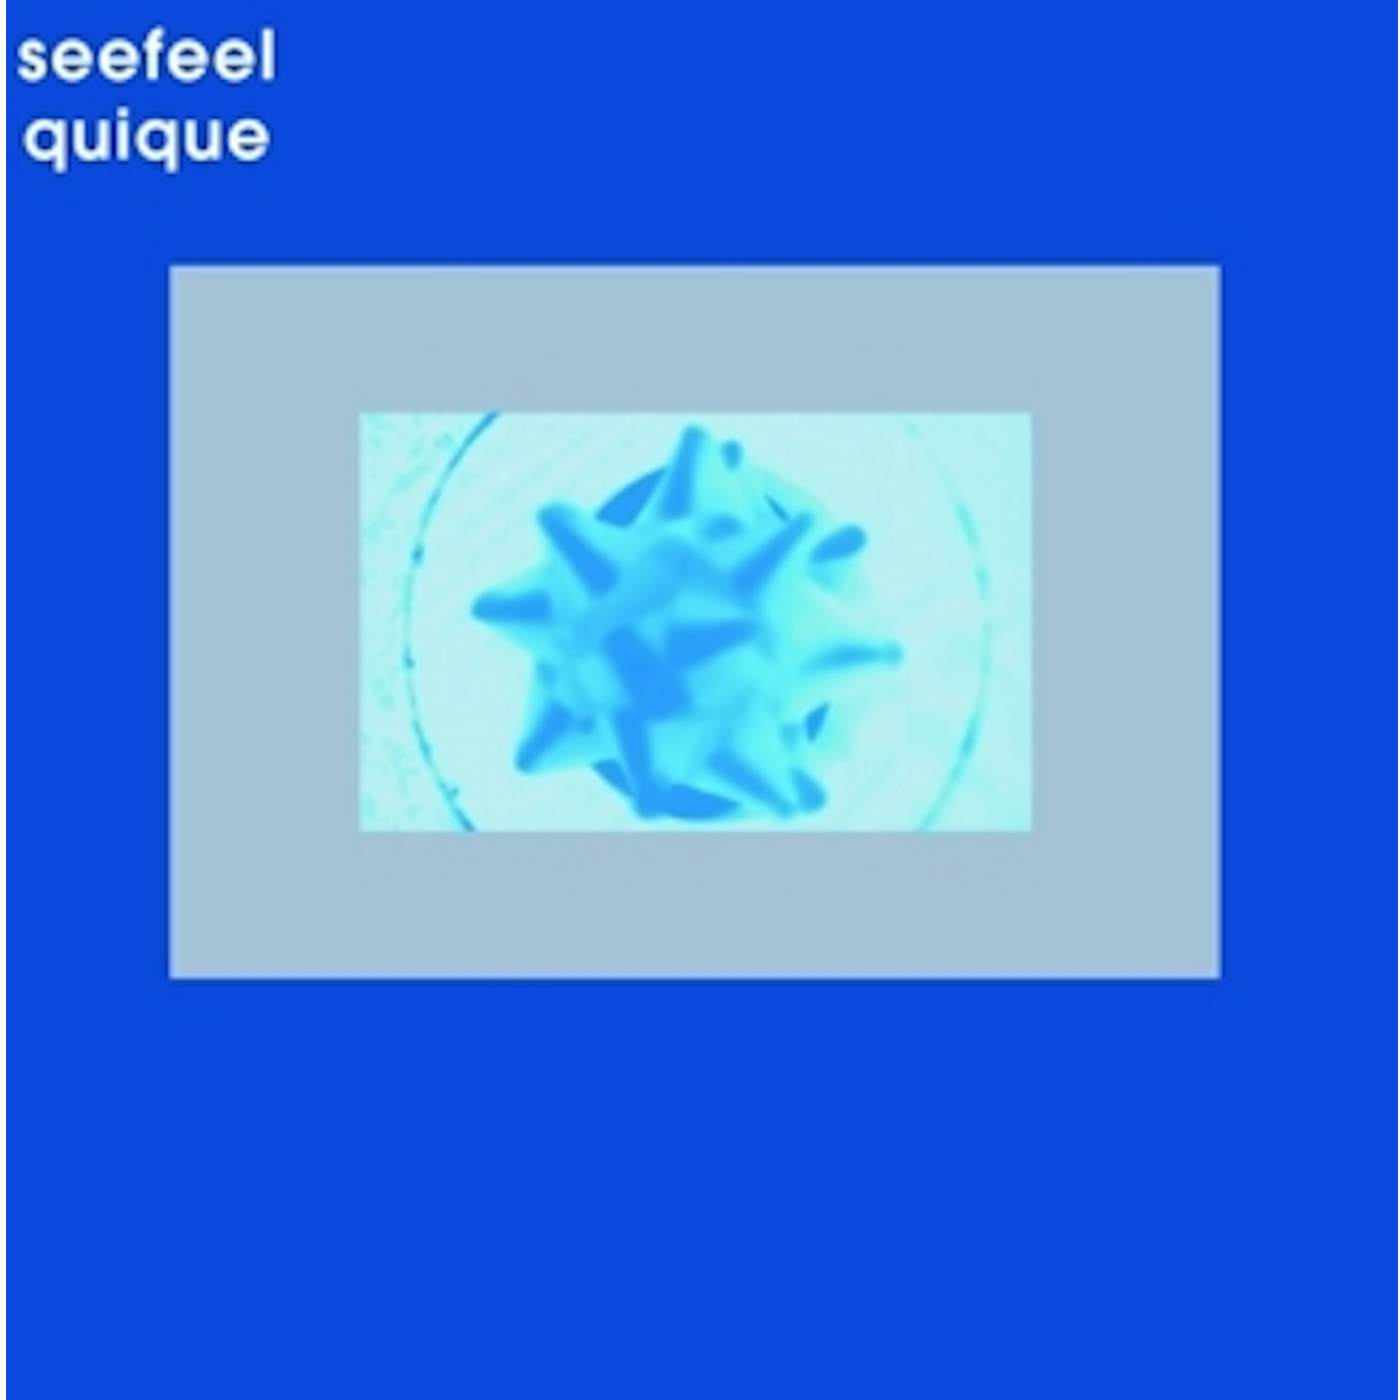 Seefeel QUIQUE Vinyl Record - Canada Release